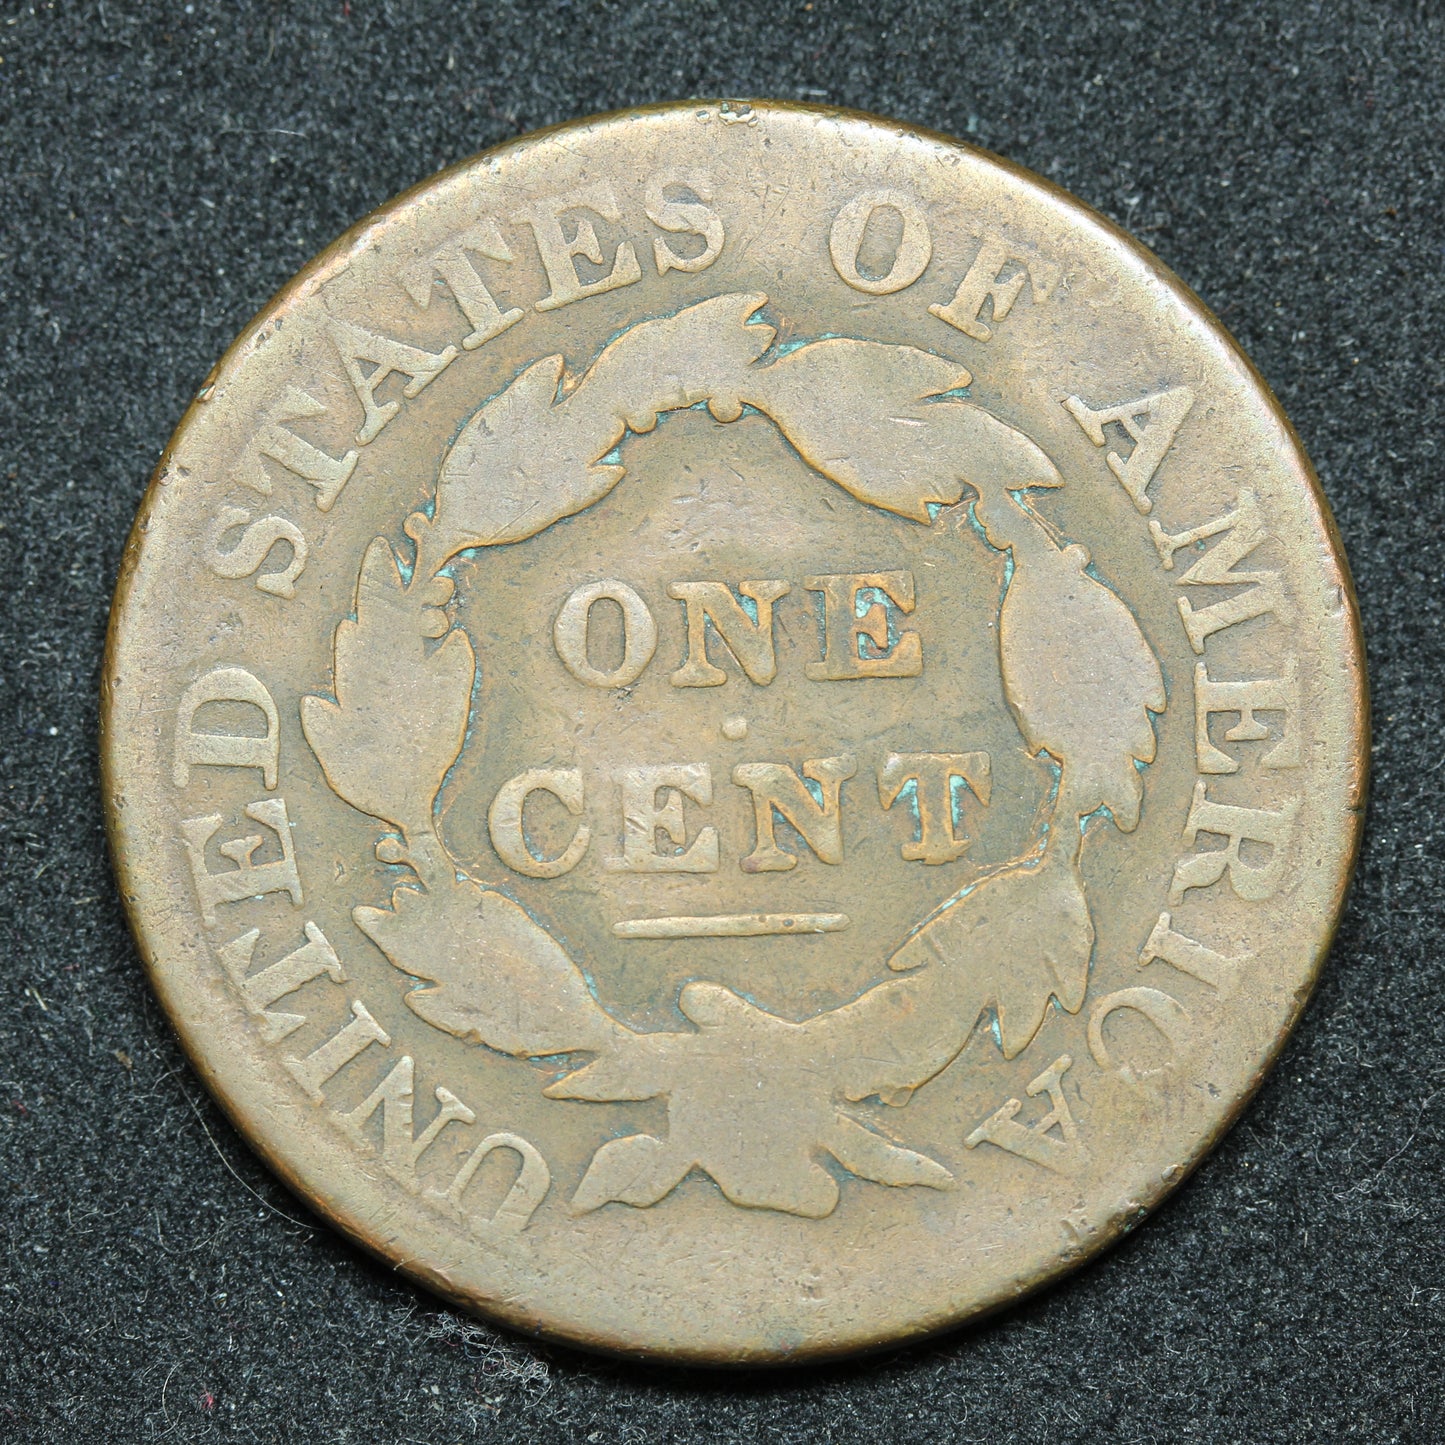 1827 Matron Coronet Head Large Cent 1C Penny